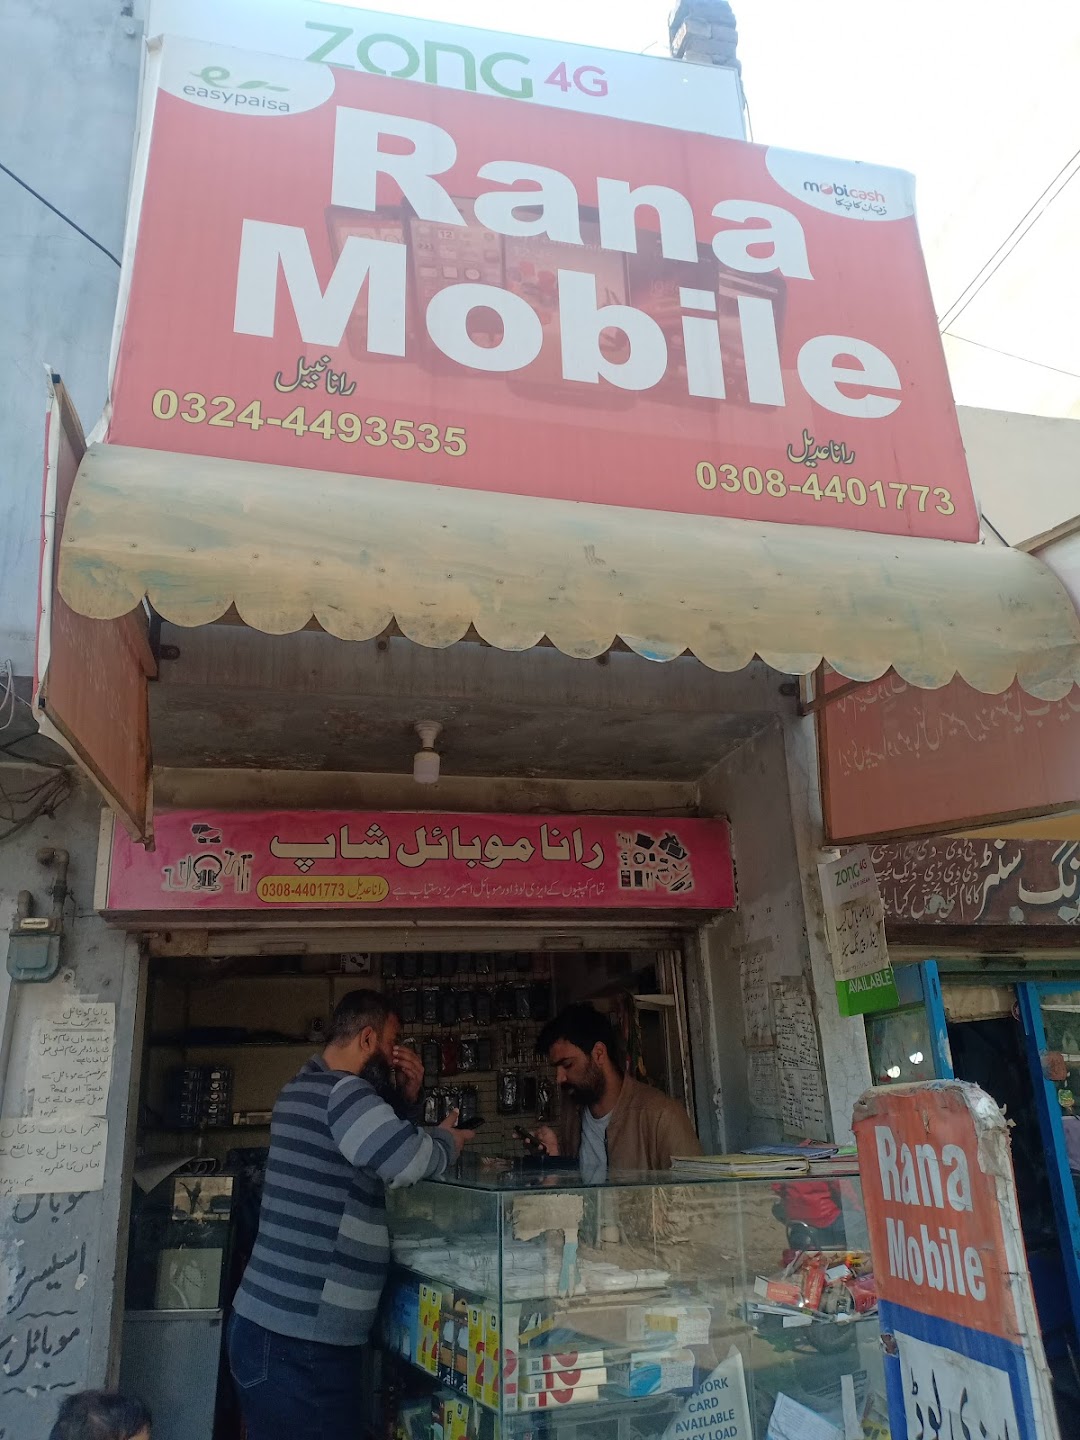 Rana Mobile shop and Repairing Lab